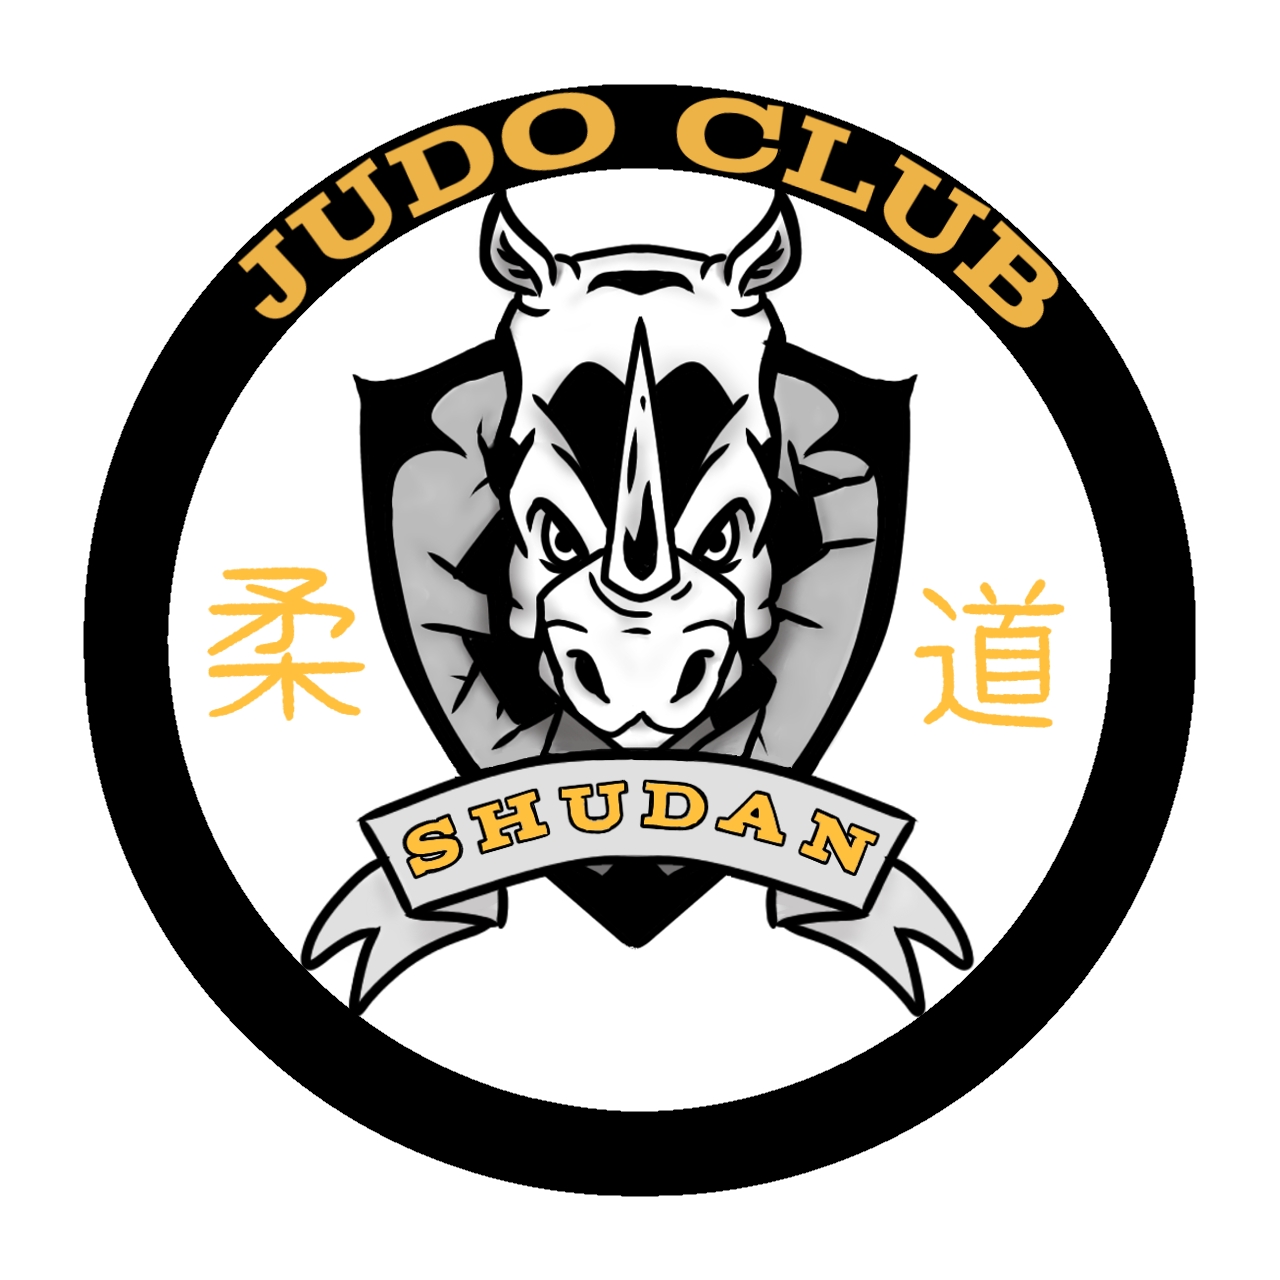 Shudan Wellingborough Judo Club